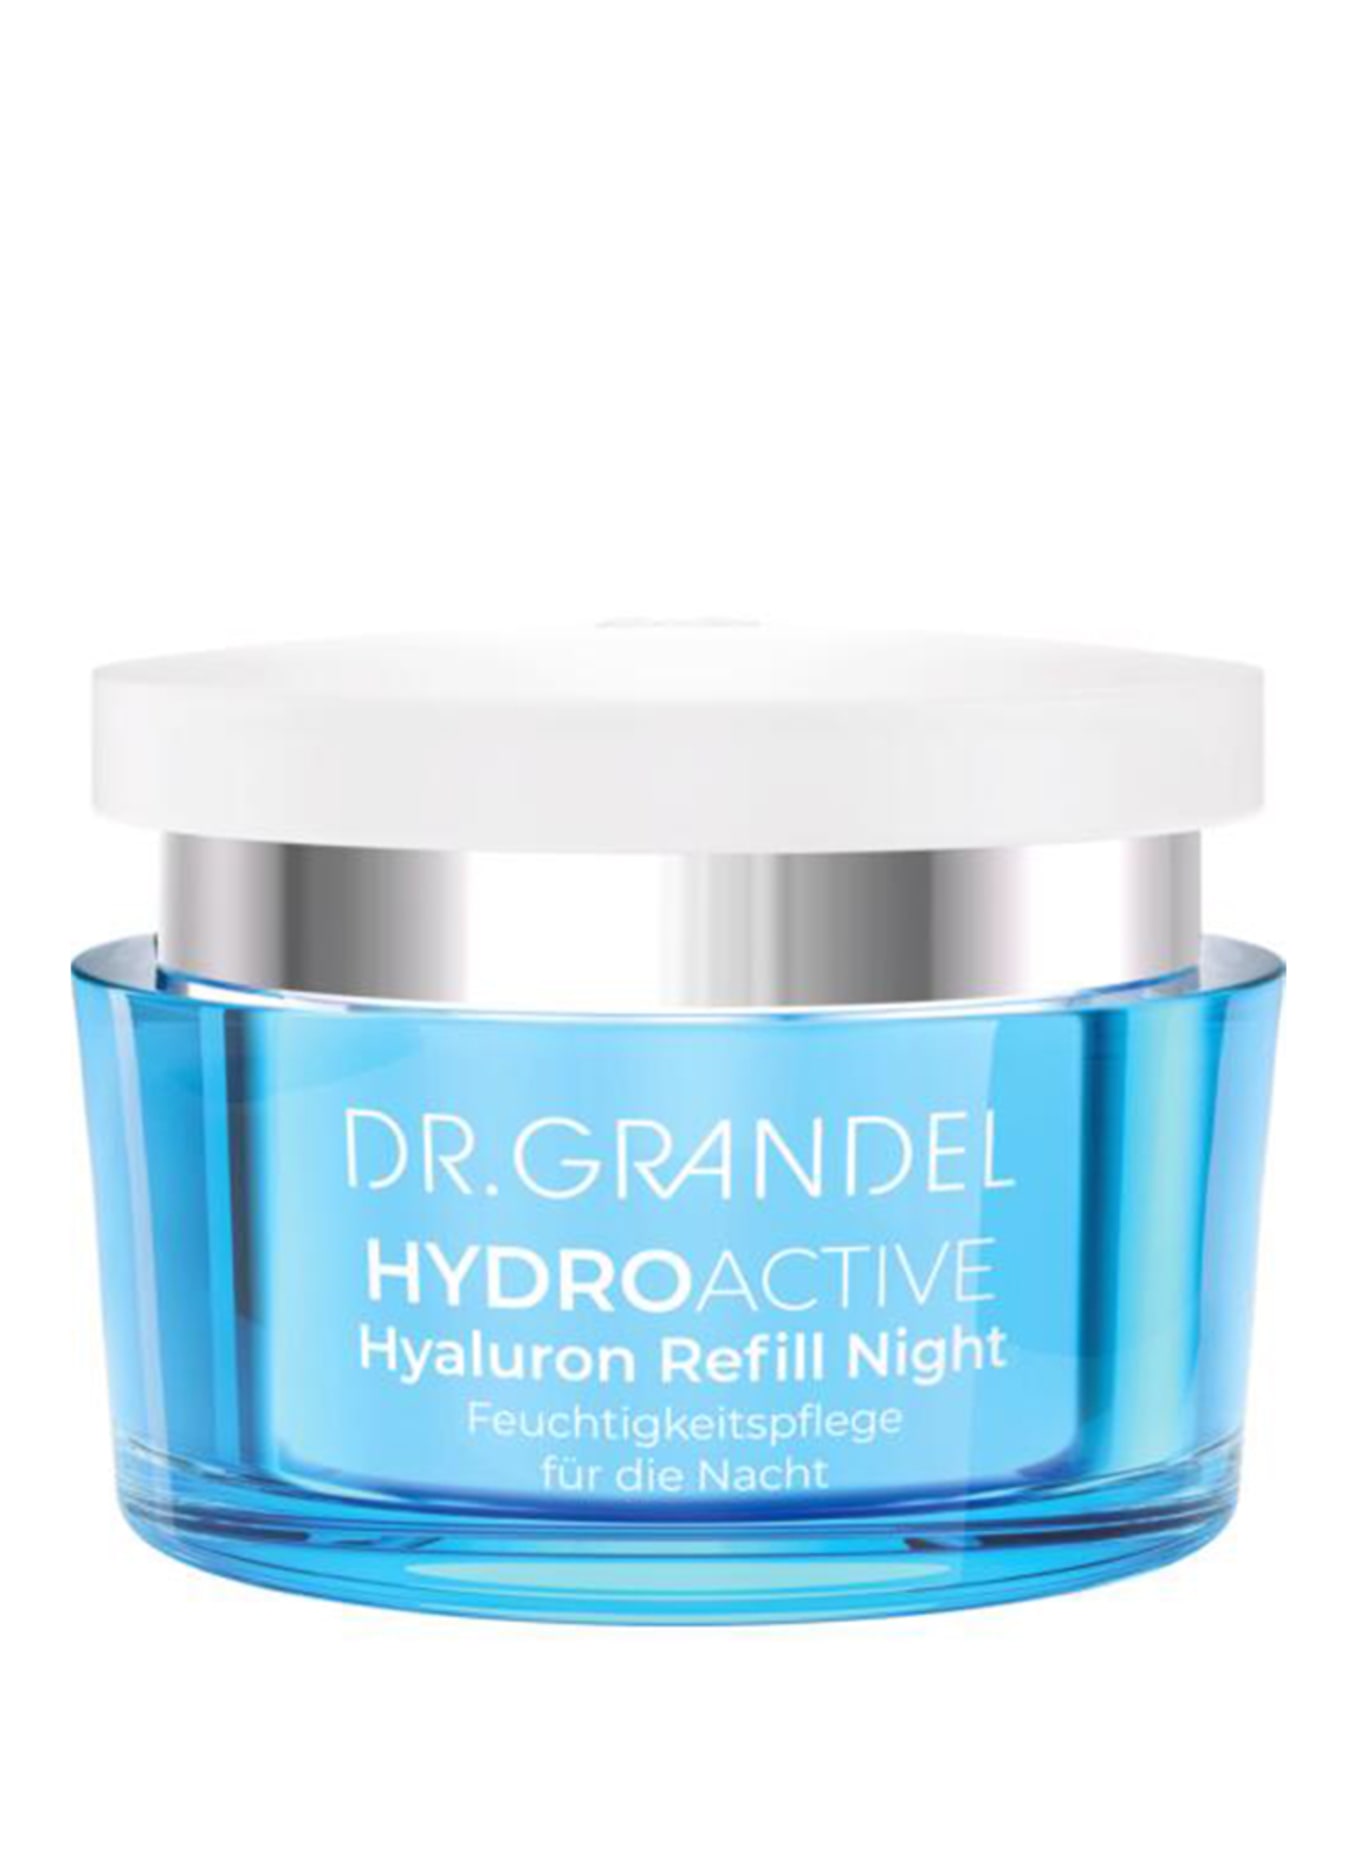 DR. GRANDEL HYDRO ACTIVE - HYALURON REFILL NIGHT (Bild 1)